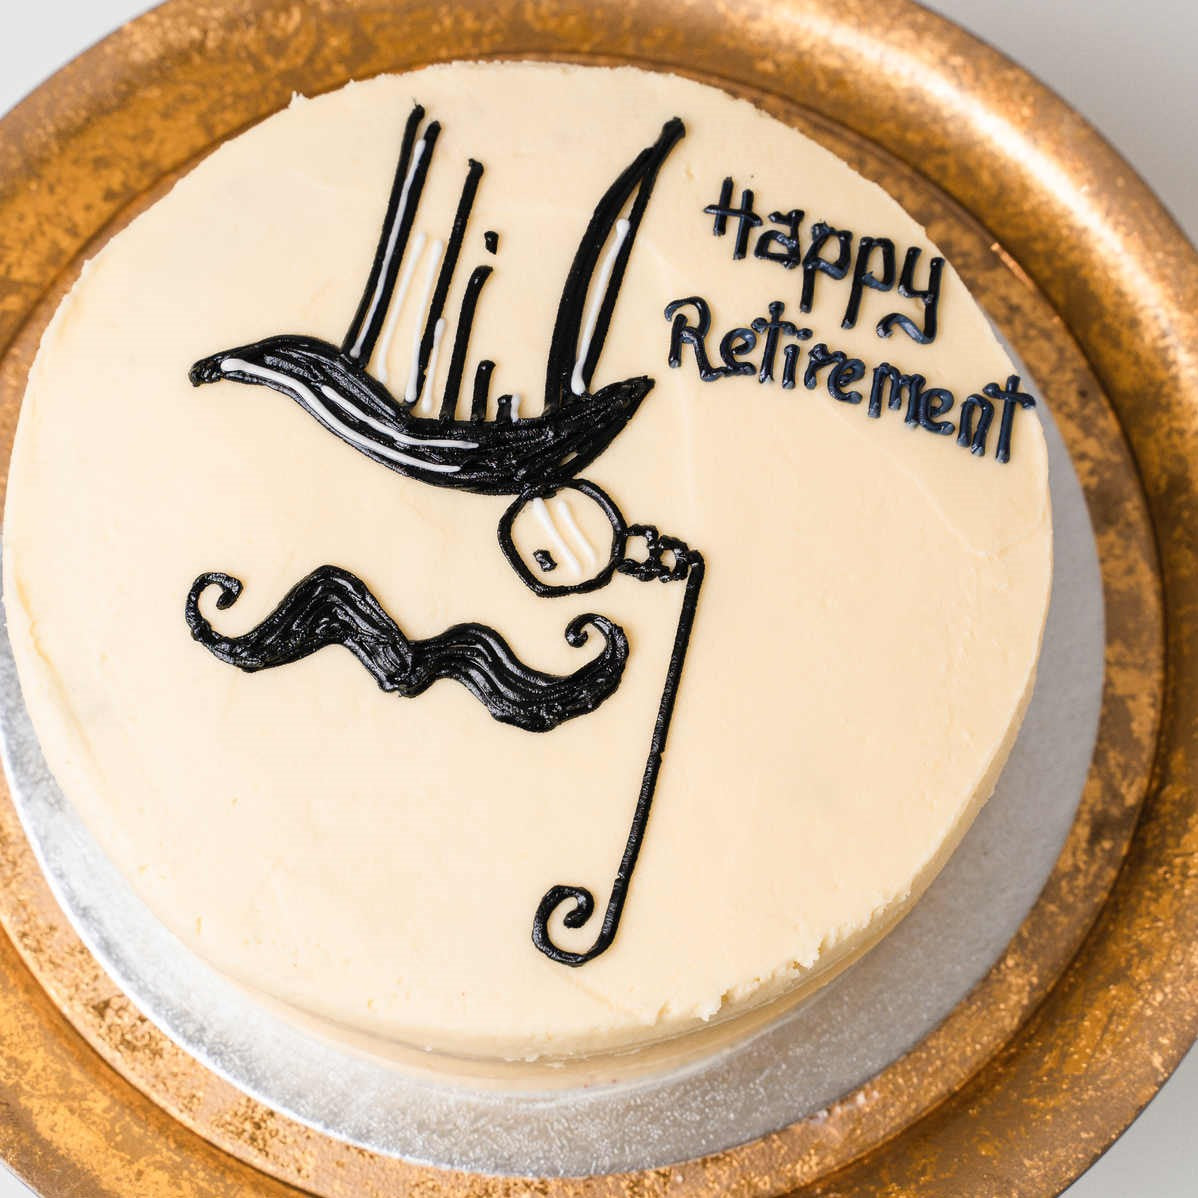 Retirement Party Cakes